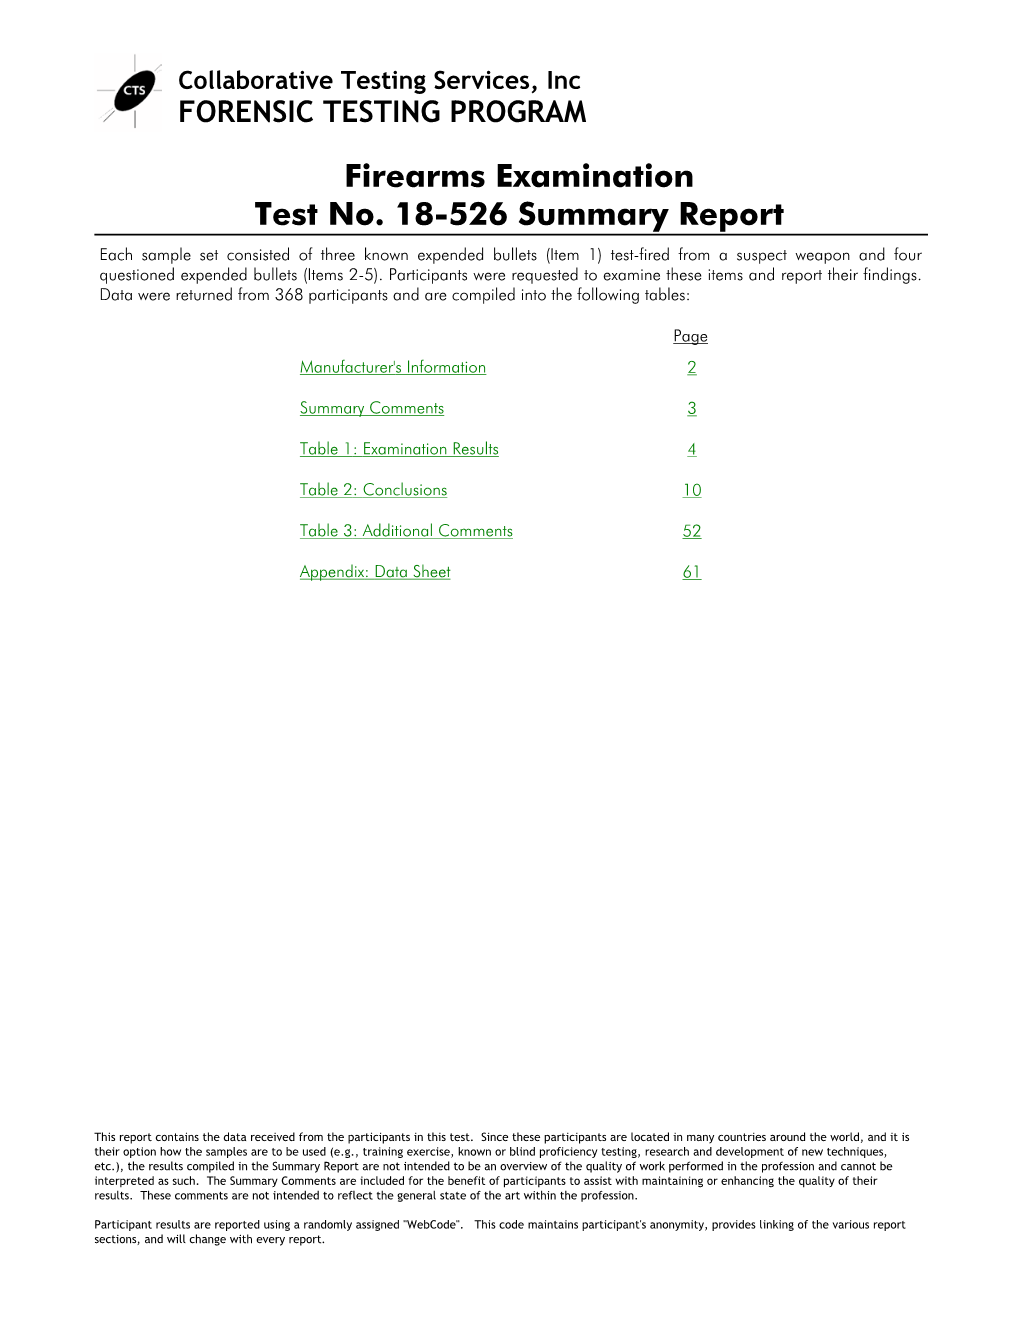 Firearms Examination Test No. 18-526 Summary Report